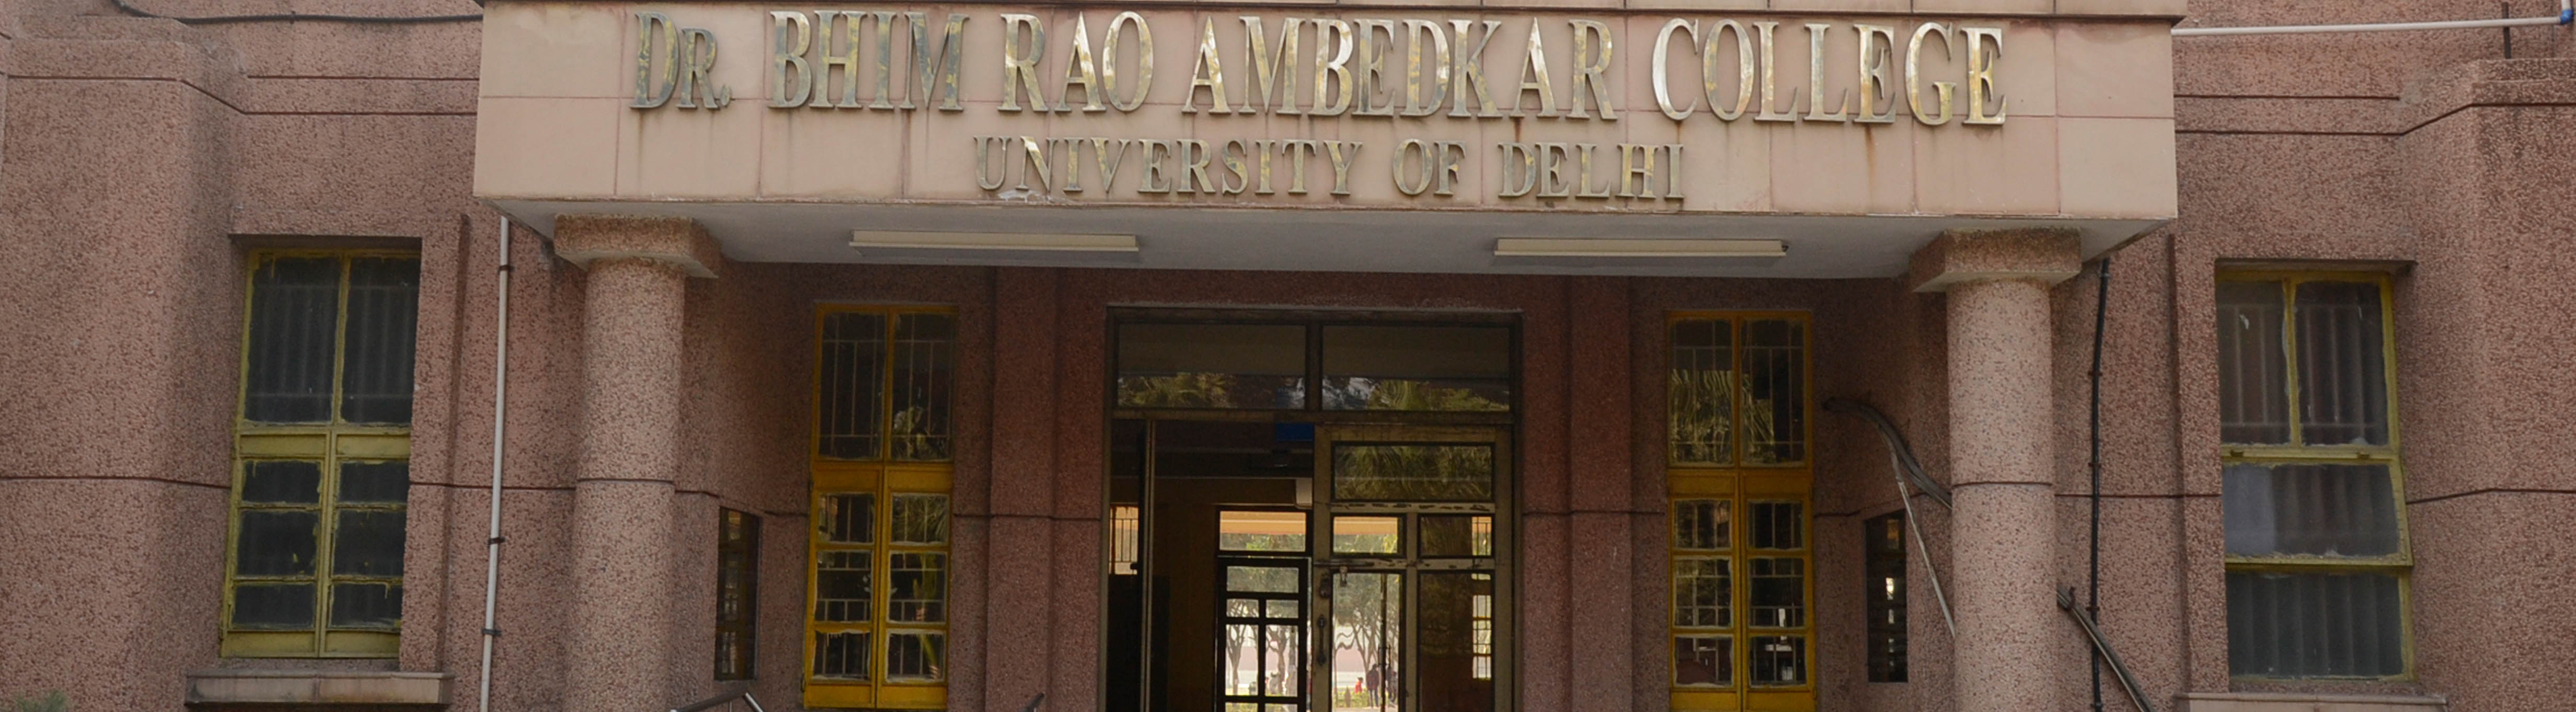 Bhim Rao Ambedkar College, Delhi